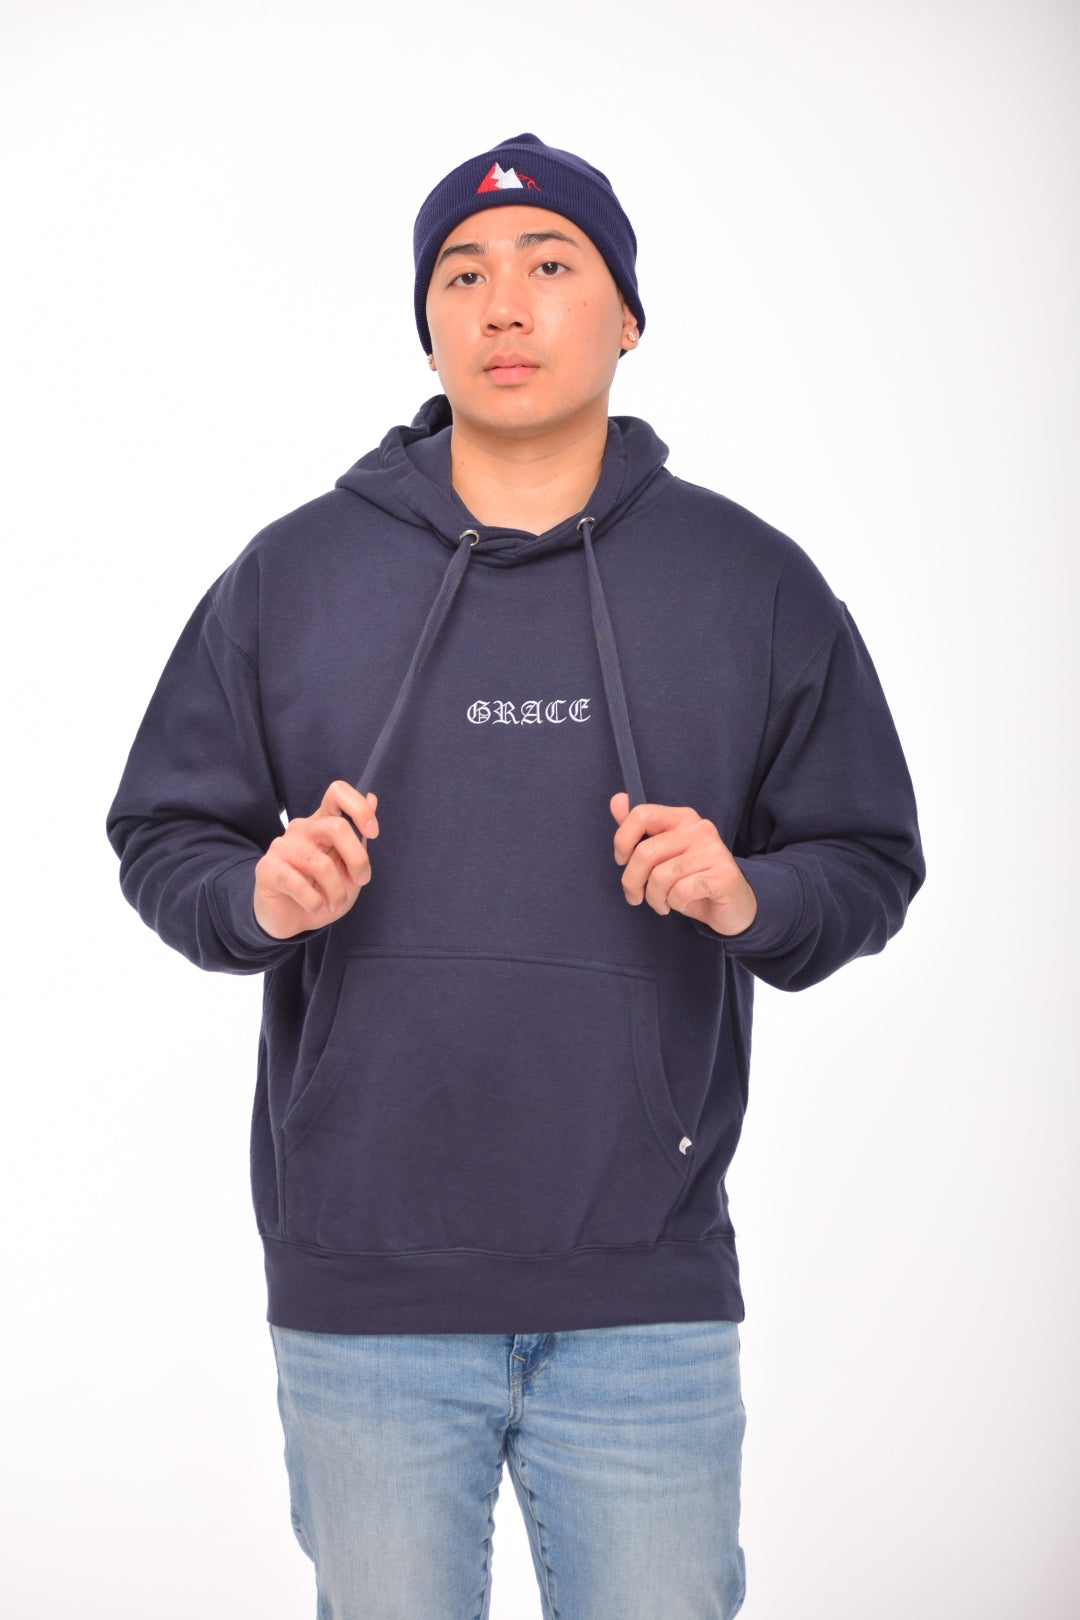 Grace Embroidered Unisex Premium Hoodie